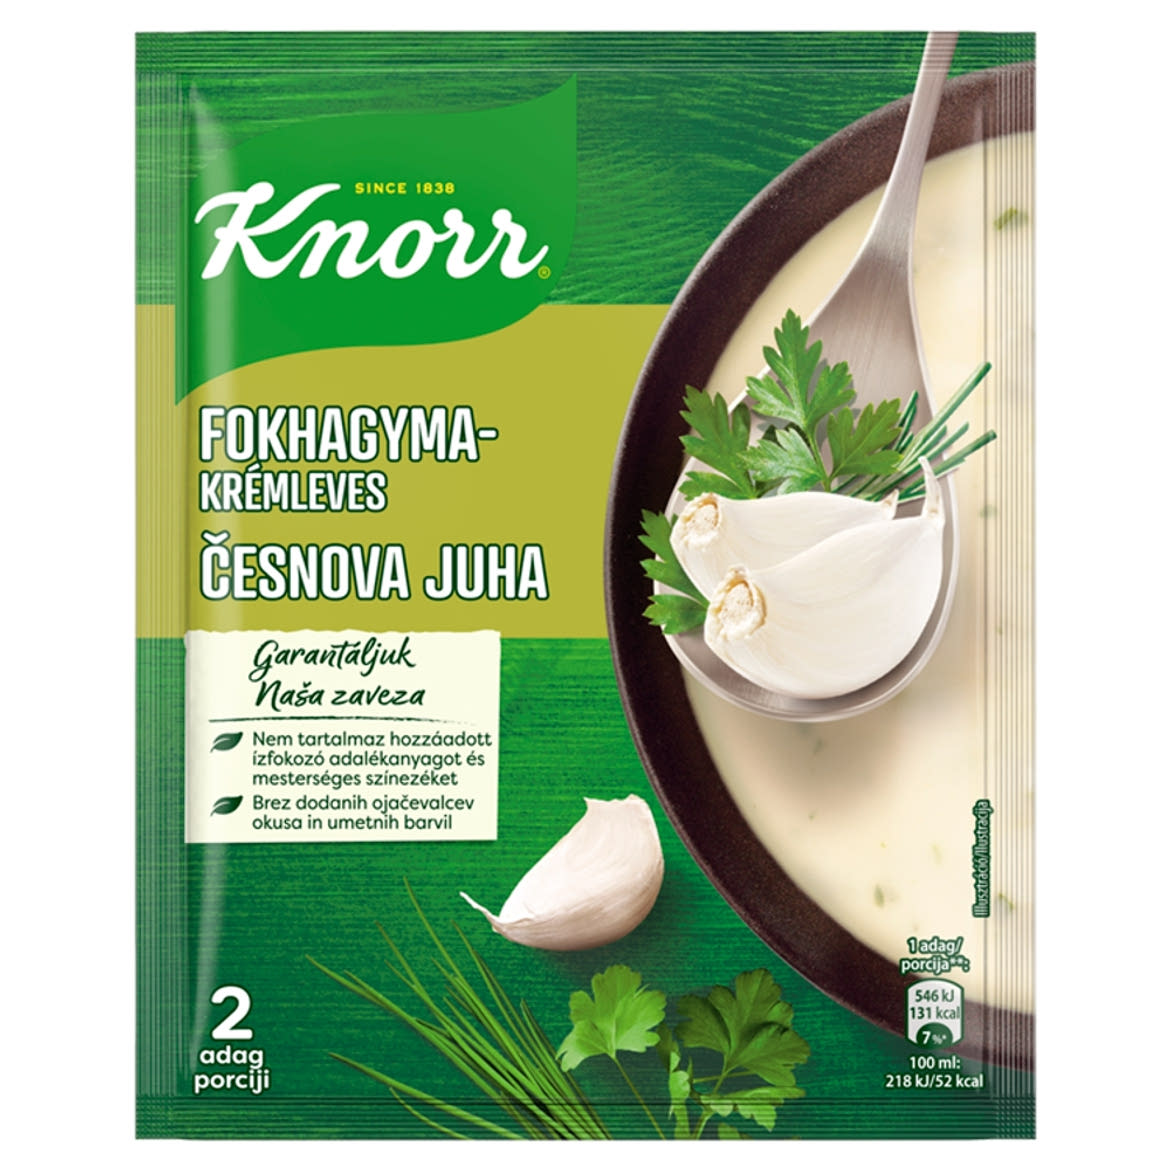 Knorr fokhagymakrémleves